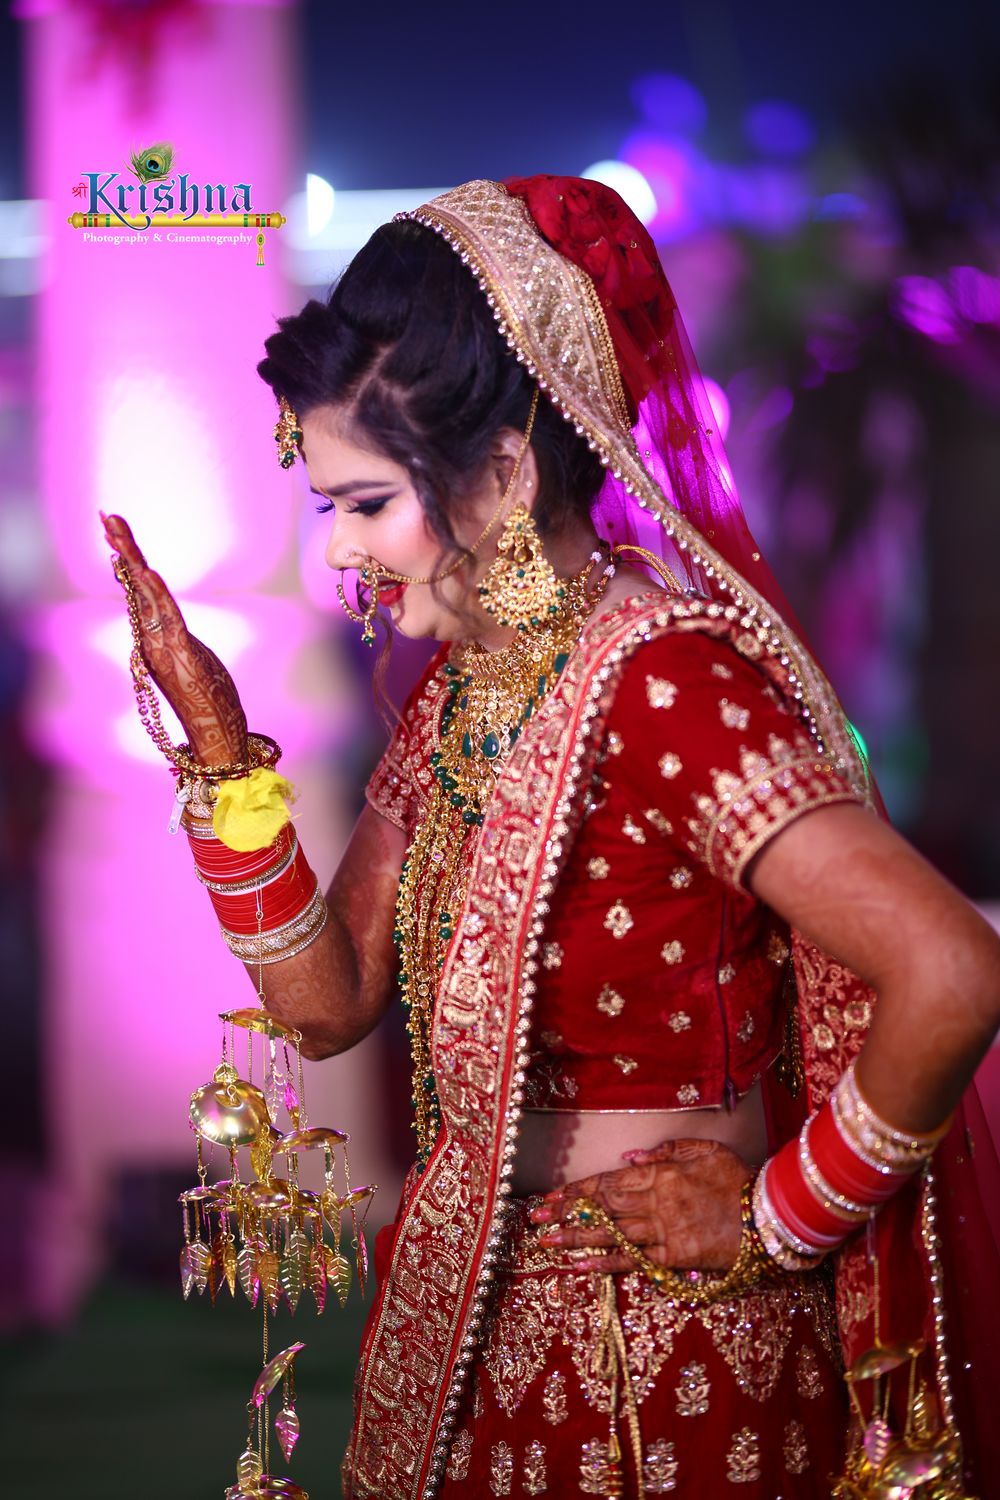 Photo From wedding galley - By Shri Krishna Photography